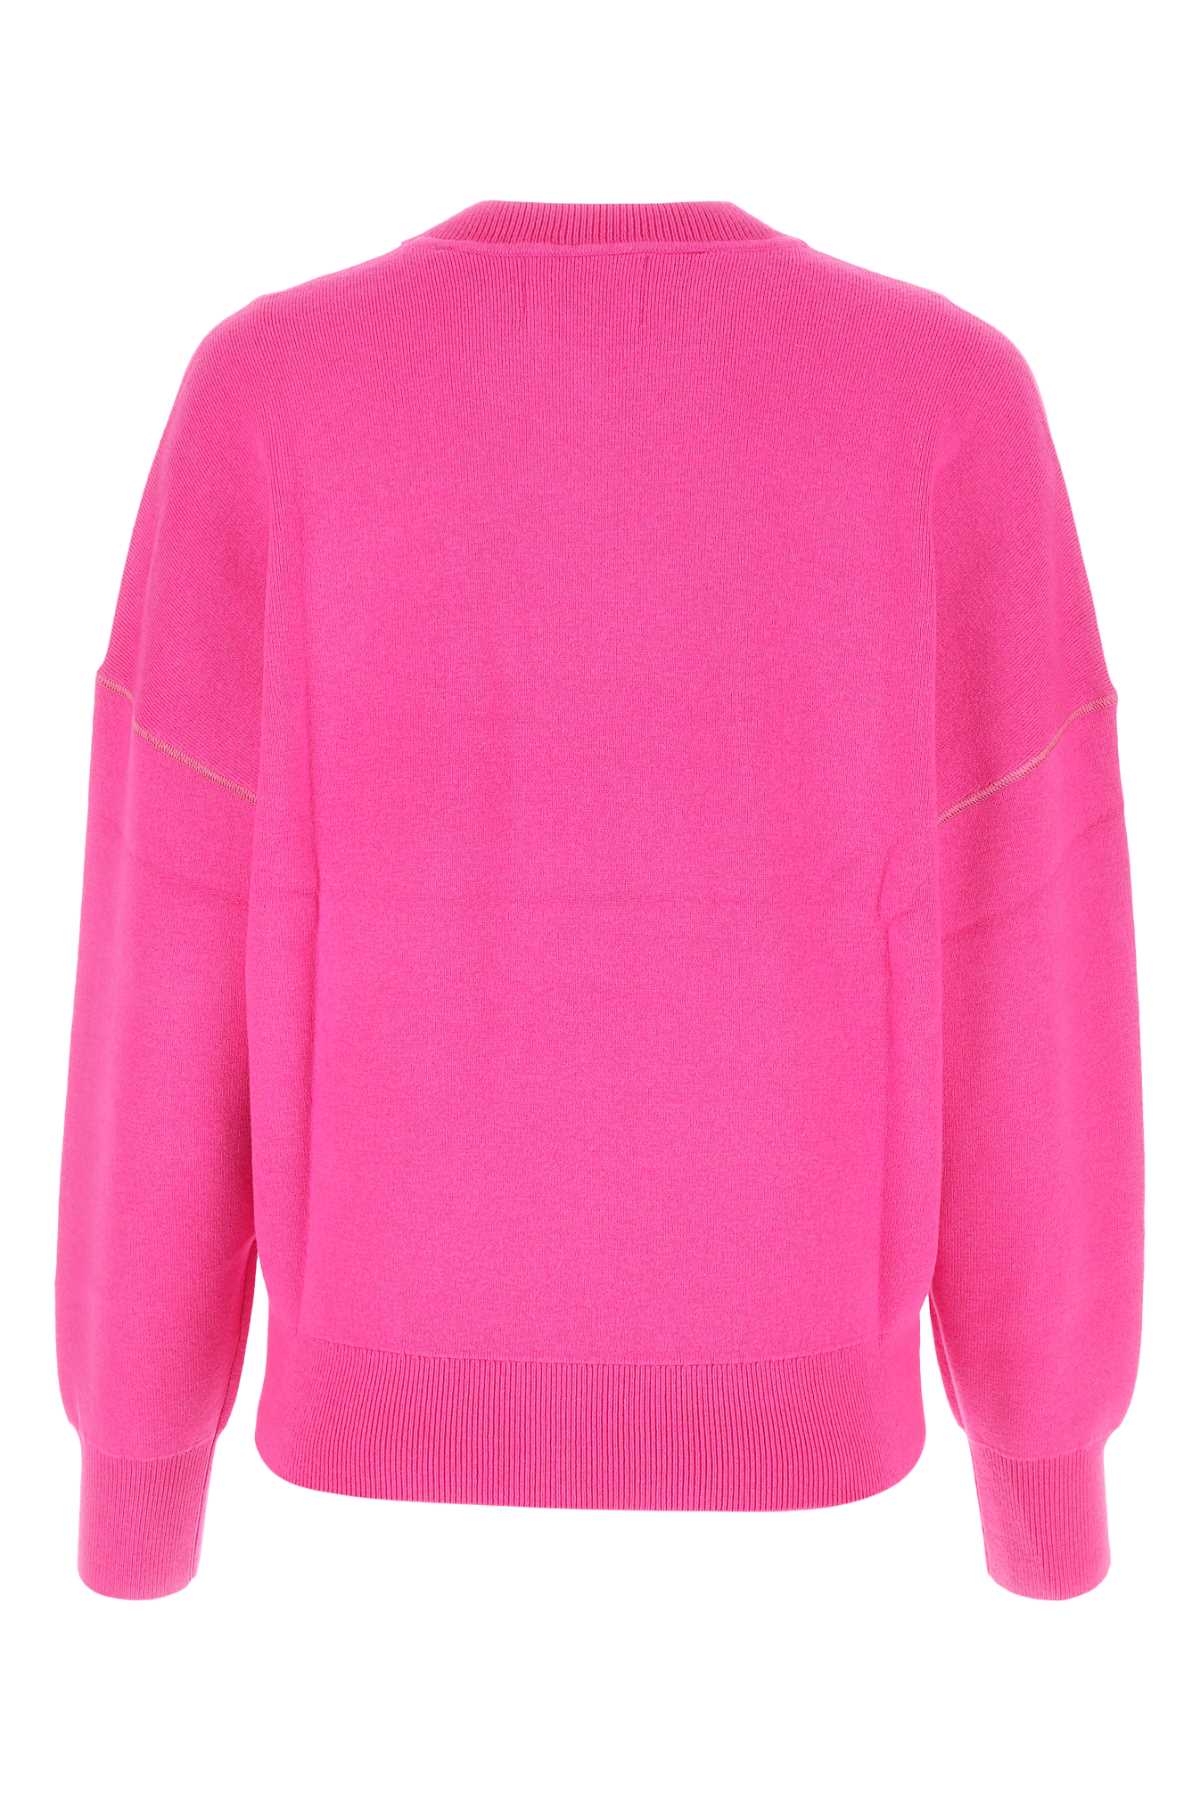 Marant Etoile Fuchsia Stretch Cotton Blend Altee Sweater In Pink